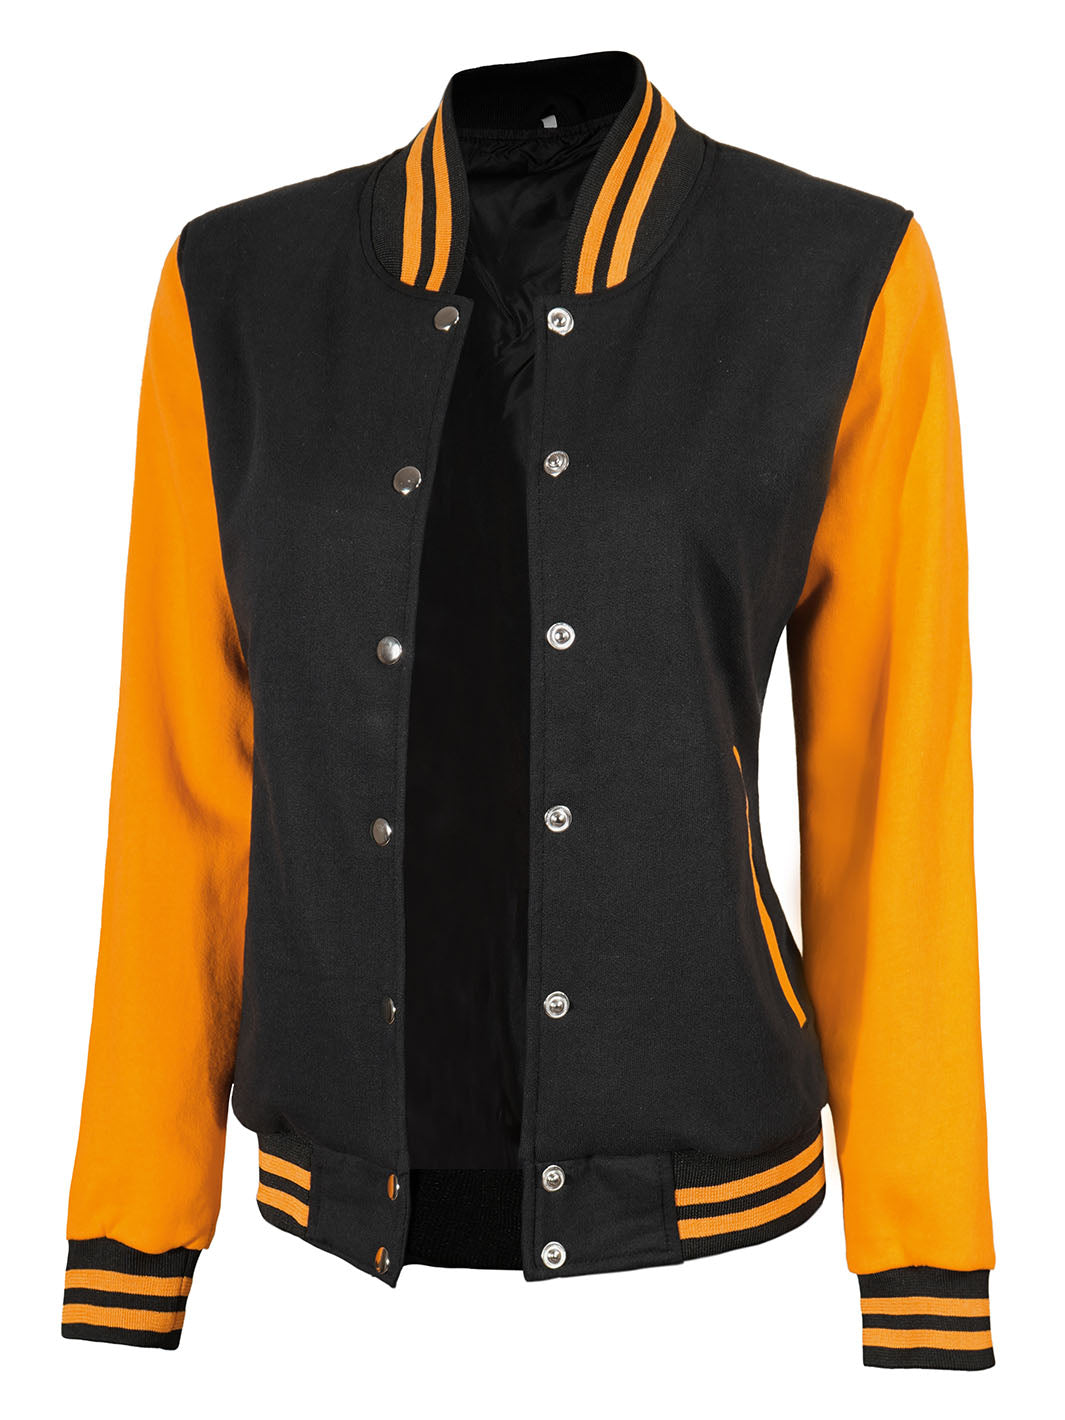 Womens Yellow & Black Plain Varsity Jacket